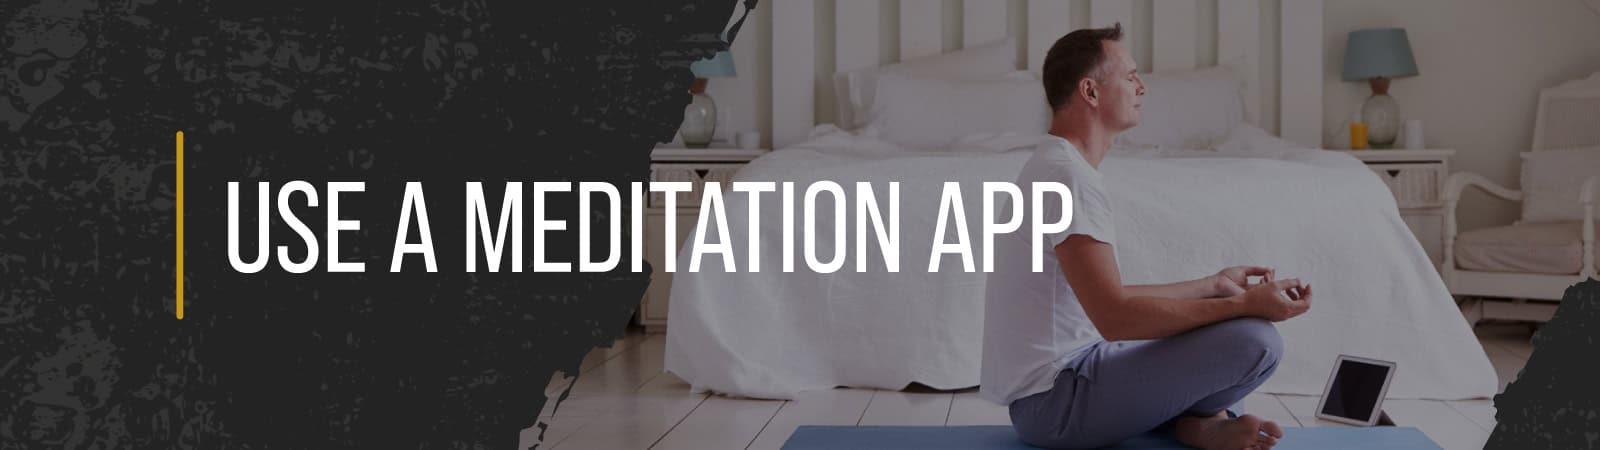 5 Mindfulness Tips - #2 Use a Meditation App 